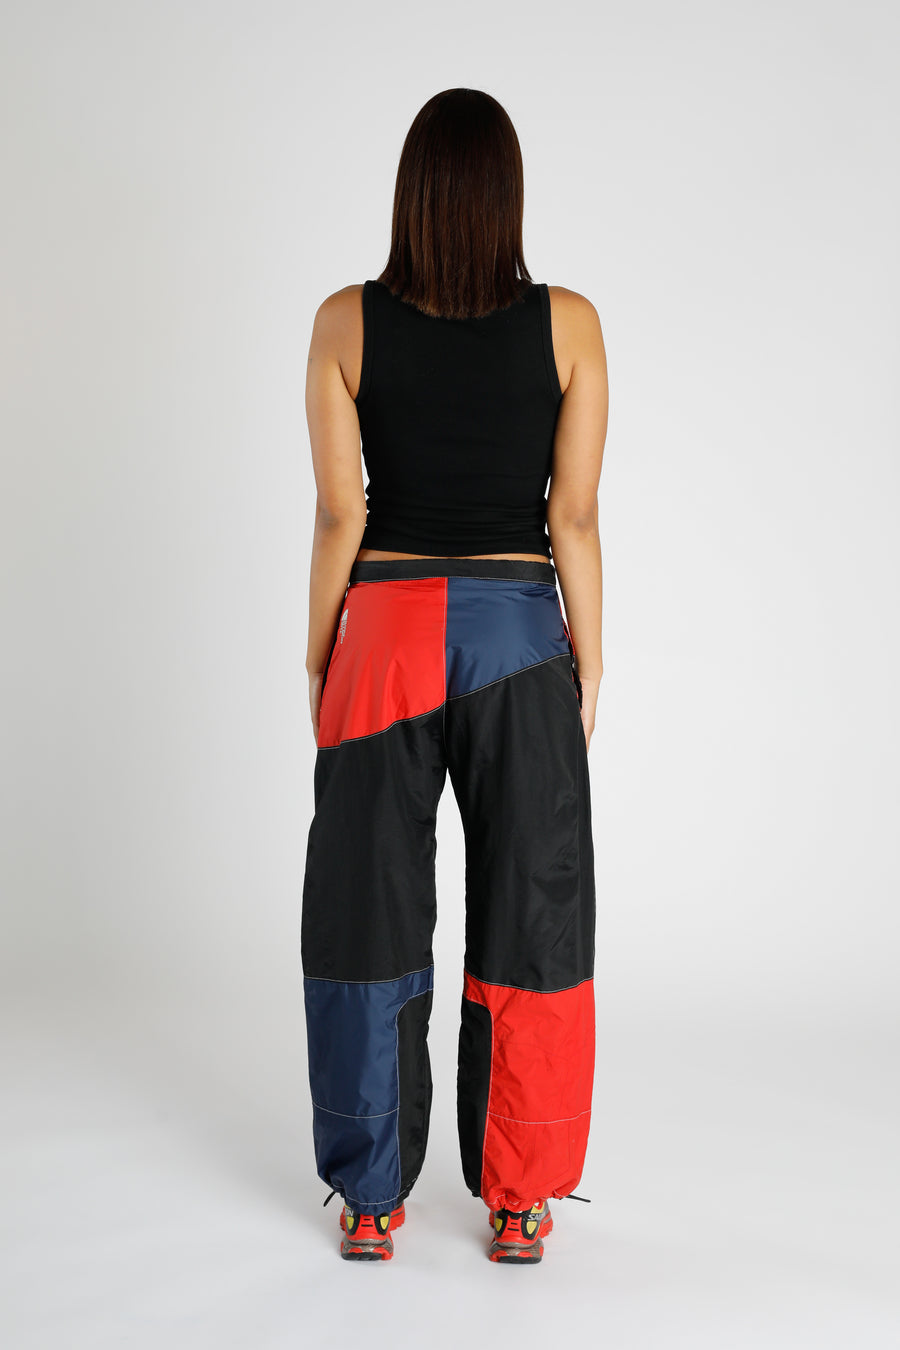 Rework Outerwear Pant - M